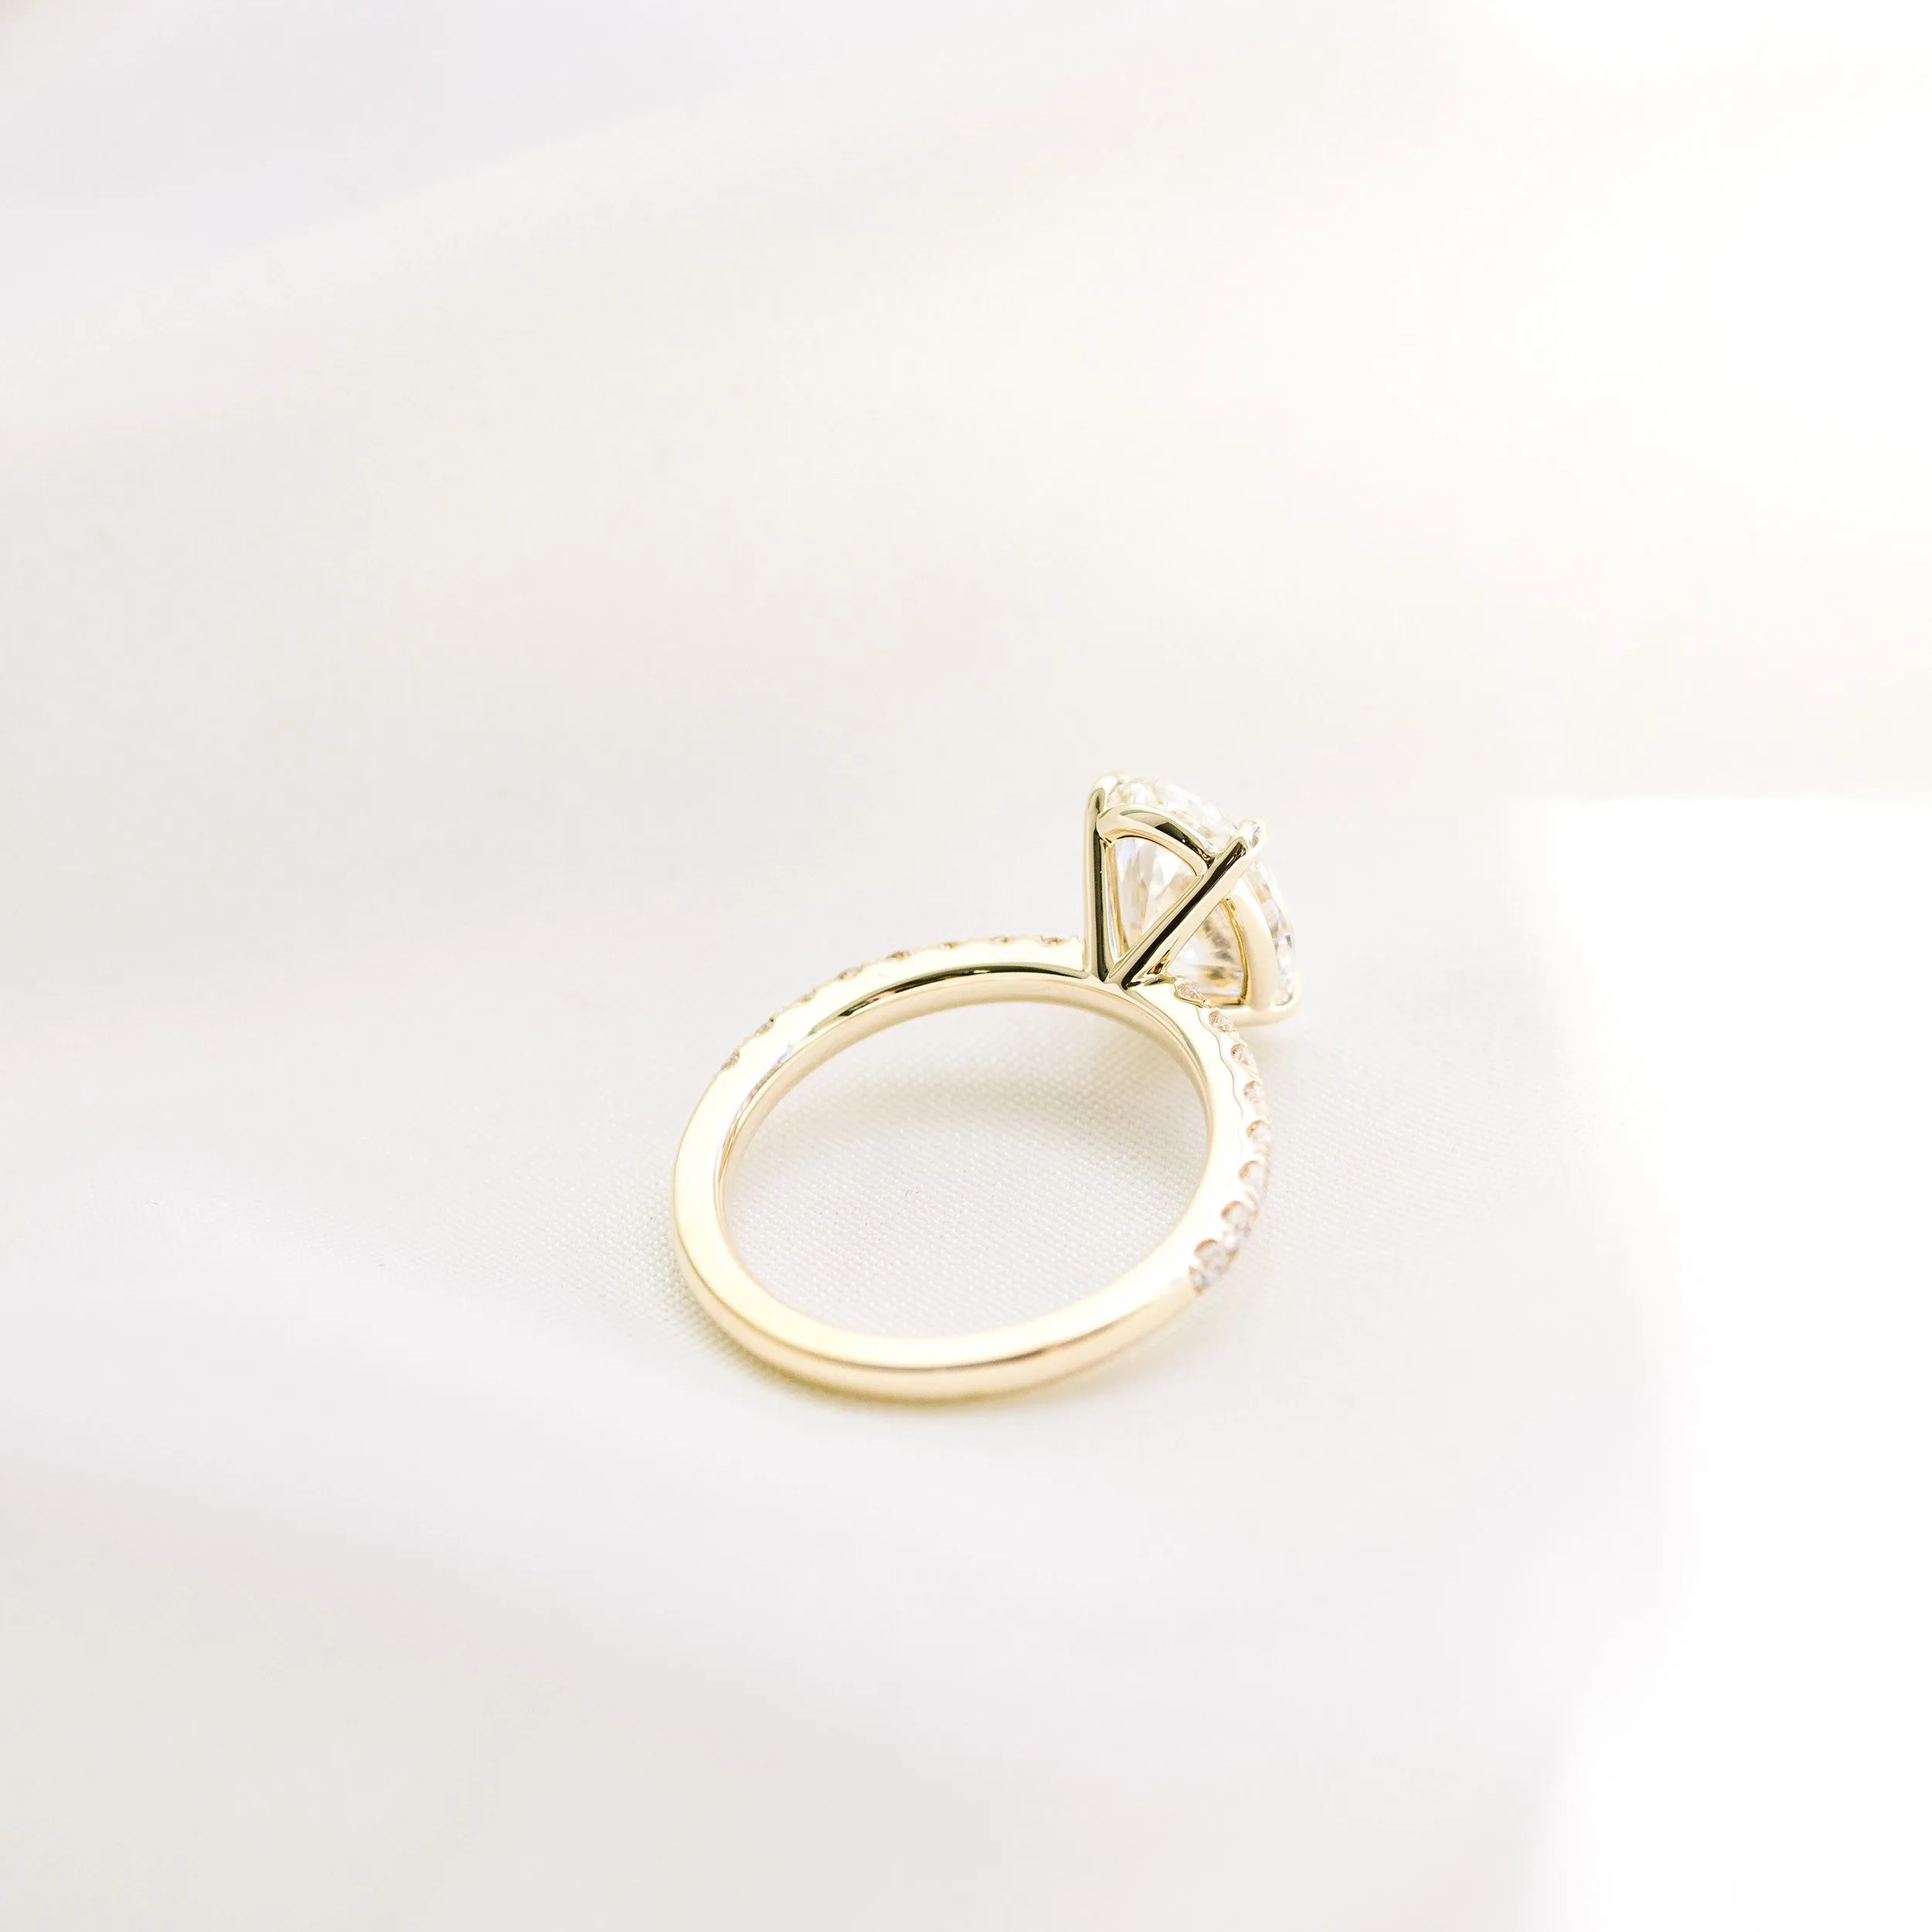 14k yellow gold 2.5 carat oval cut man made diamond engagement ring with pavé band ada diamonds design ad 230 profile